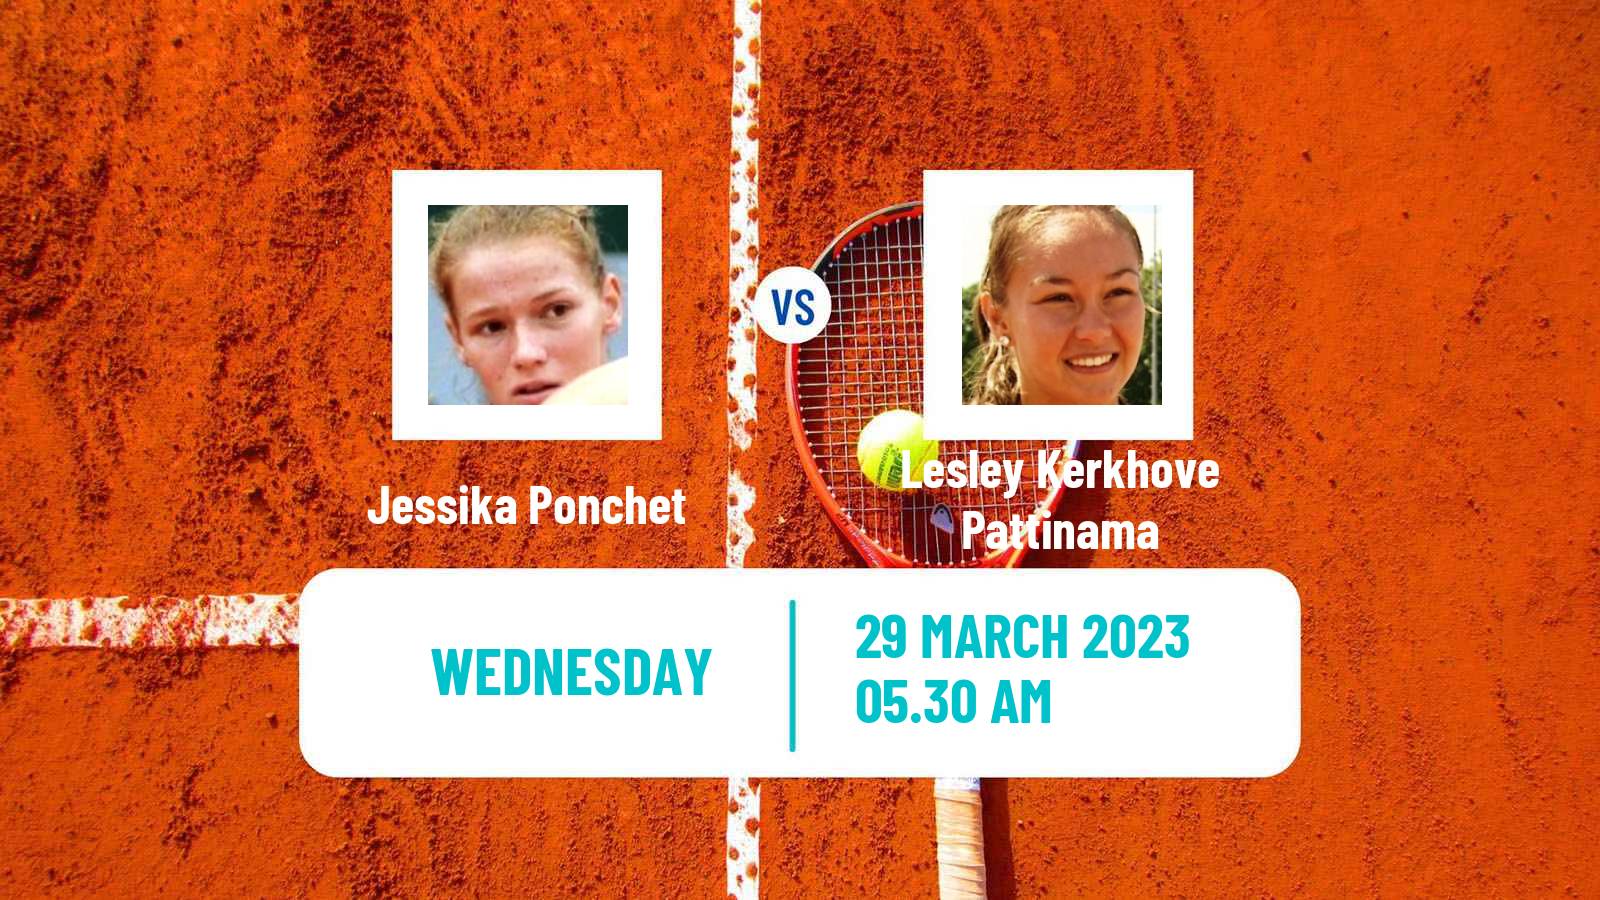 Tennis ITF Tournaments Jessika Ponchet - Lesley Kerkhove Pattinama